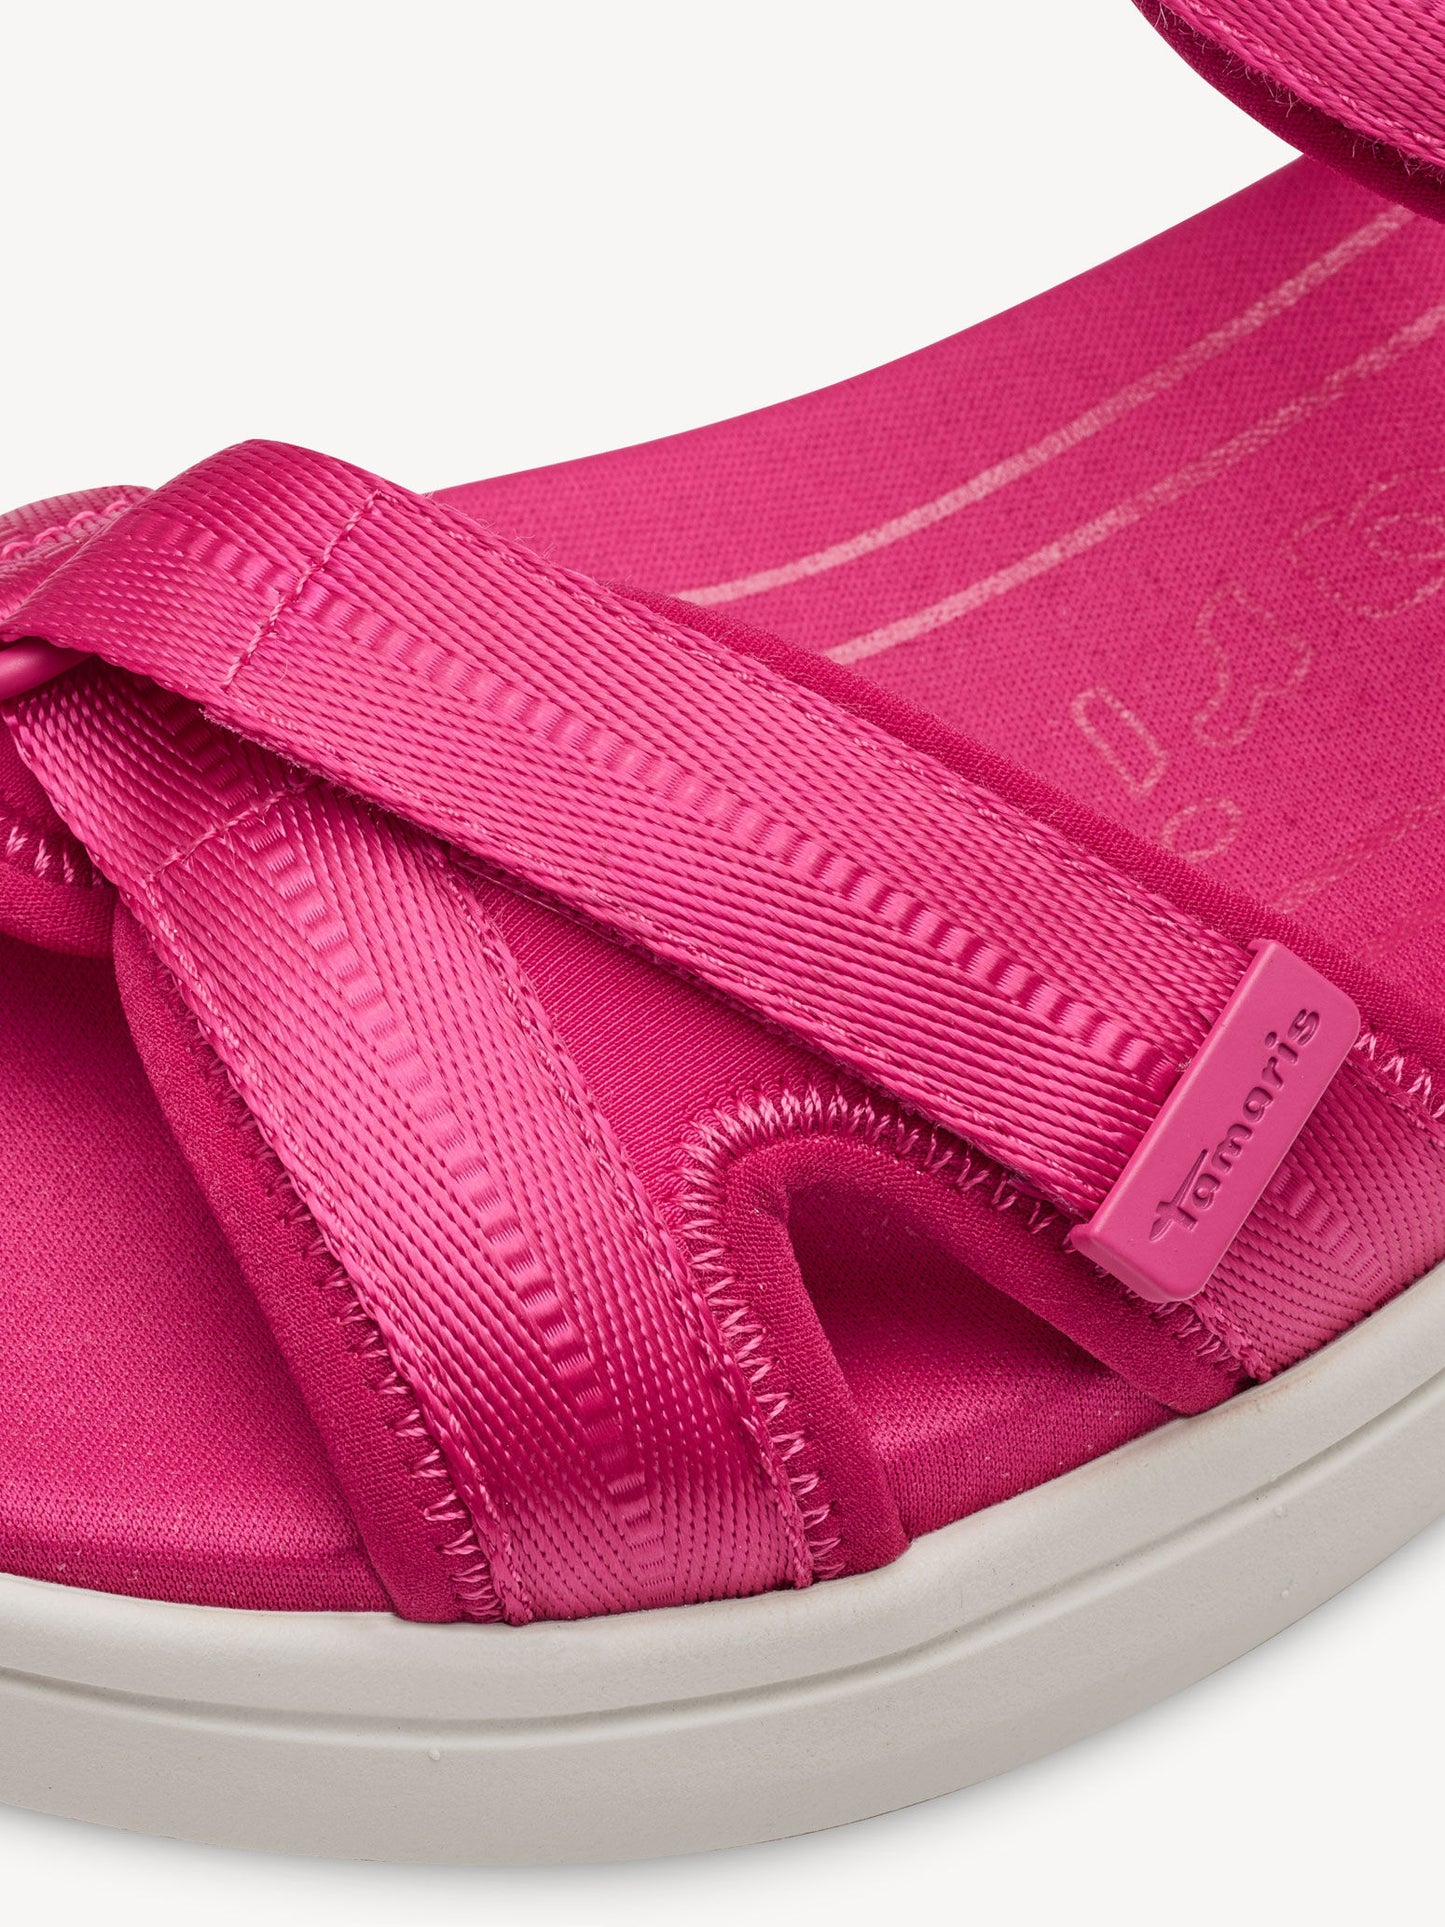 Tamaris Women's 1-28262-42 Strap Sandals Fuxia Pink